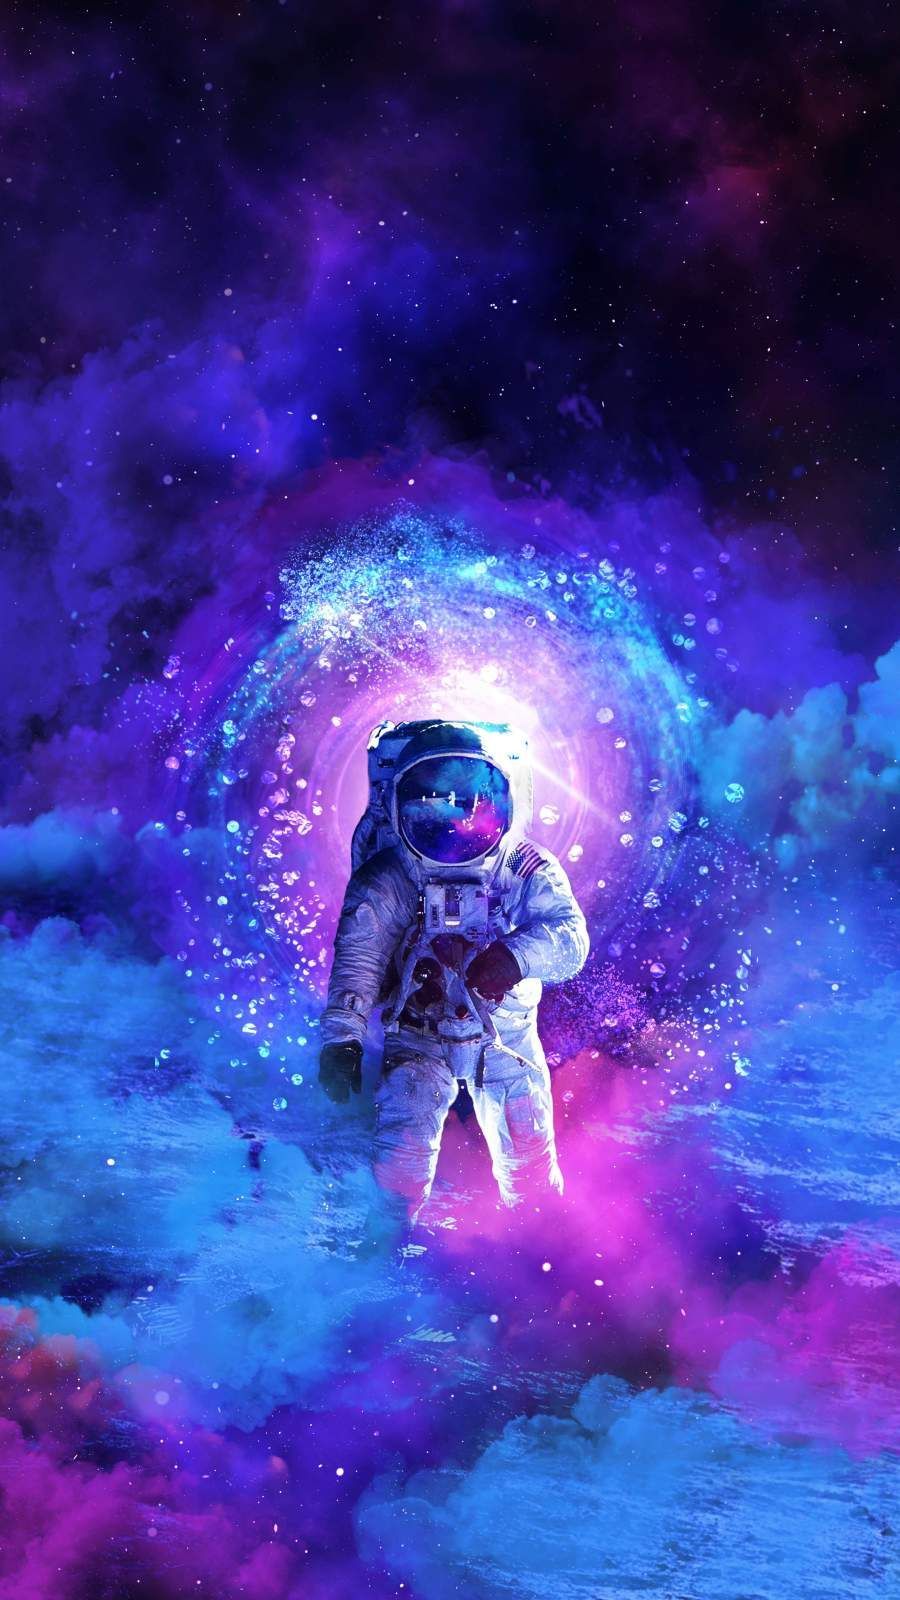 The Cosmonaut iPhone Wallpaper. Galaxy art, Astronaut wallpaper, Space art